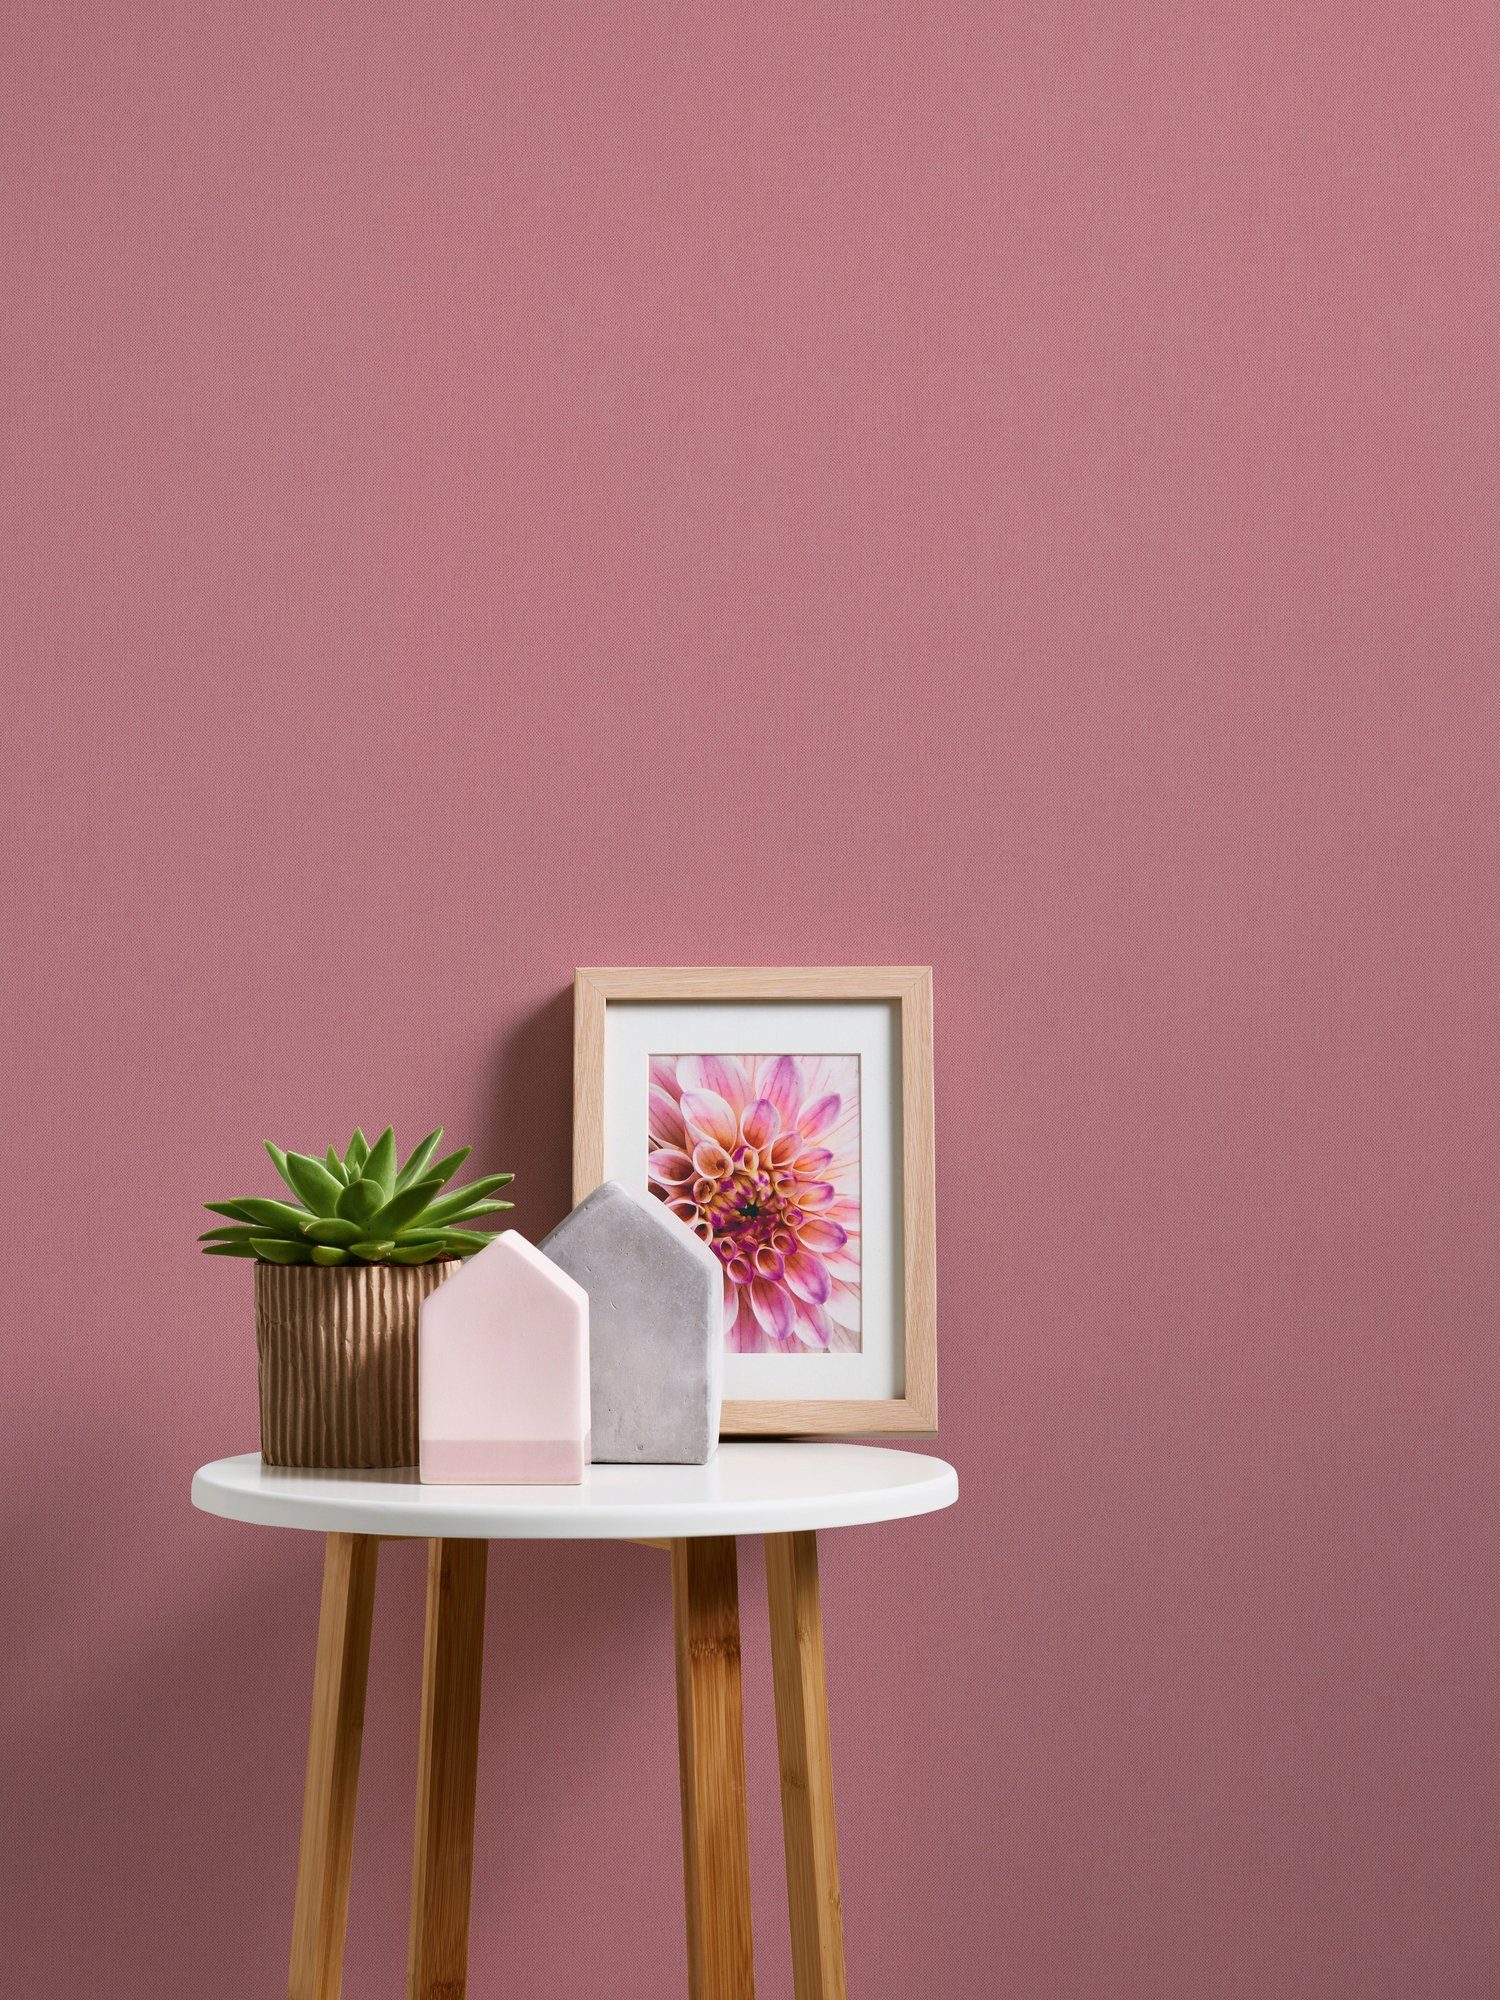 Vliestapete Paper Floral einfarbig, unifarben, Architects Tapete glatt, rosa Impression, Uni